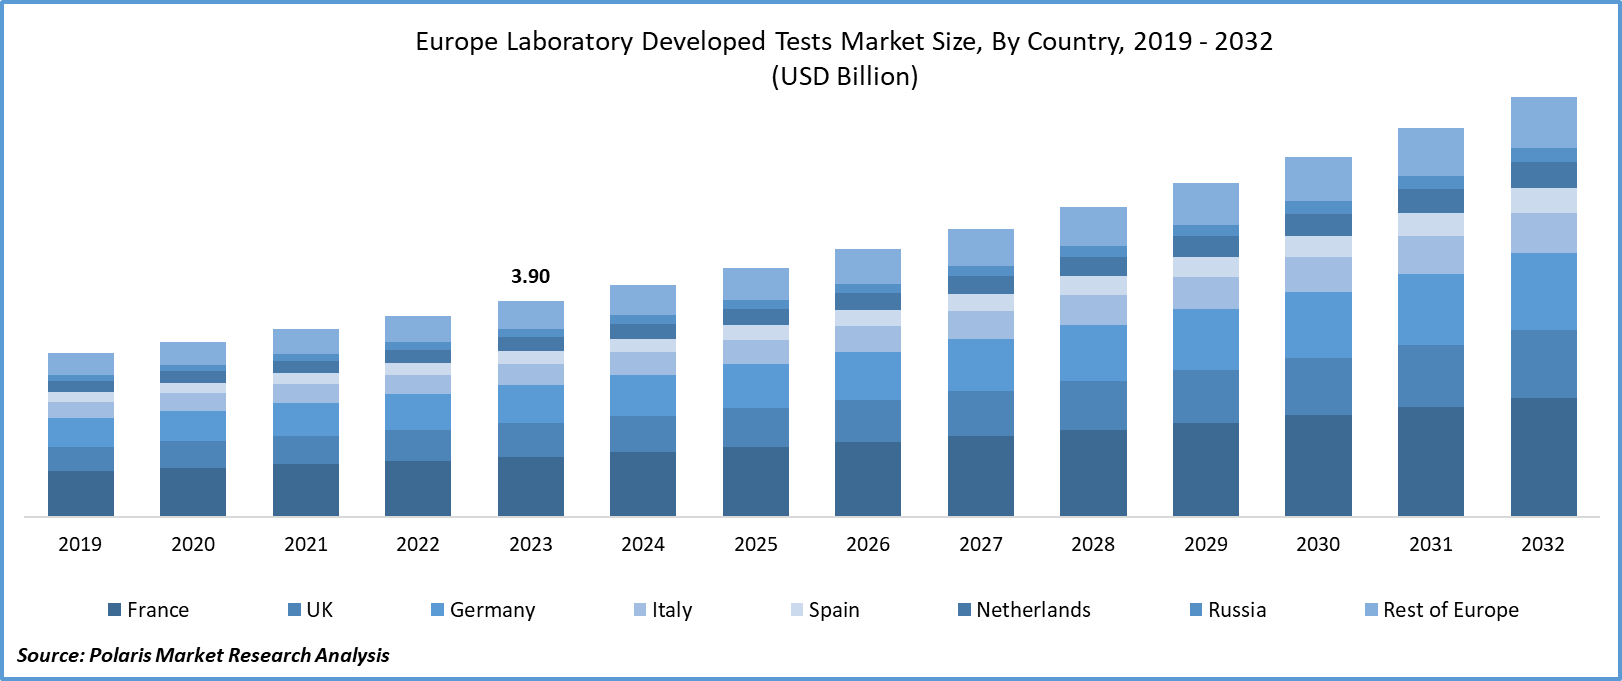 Europe Laboratory Developed Tests Market Size